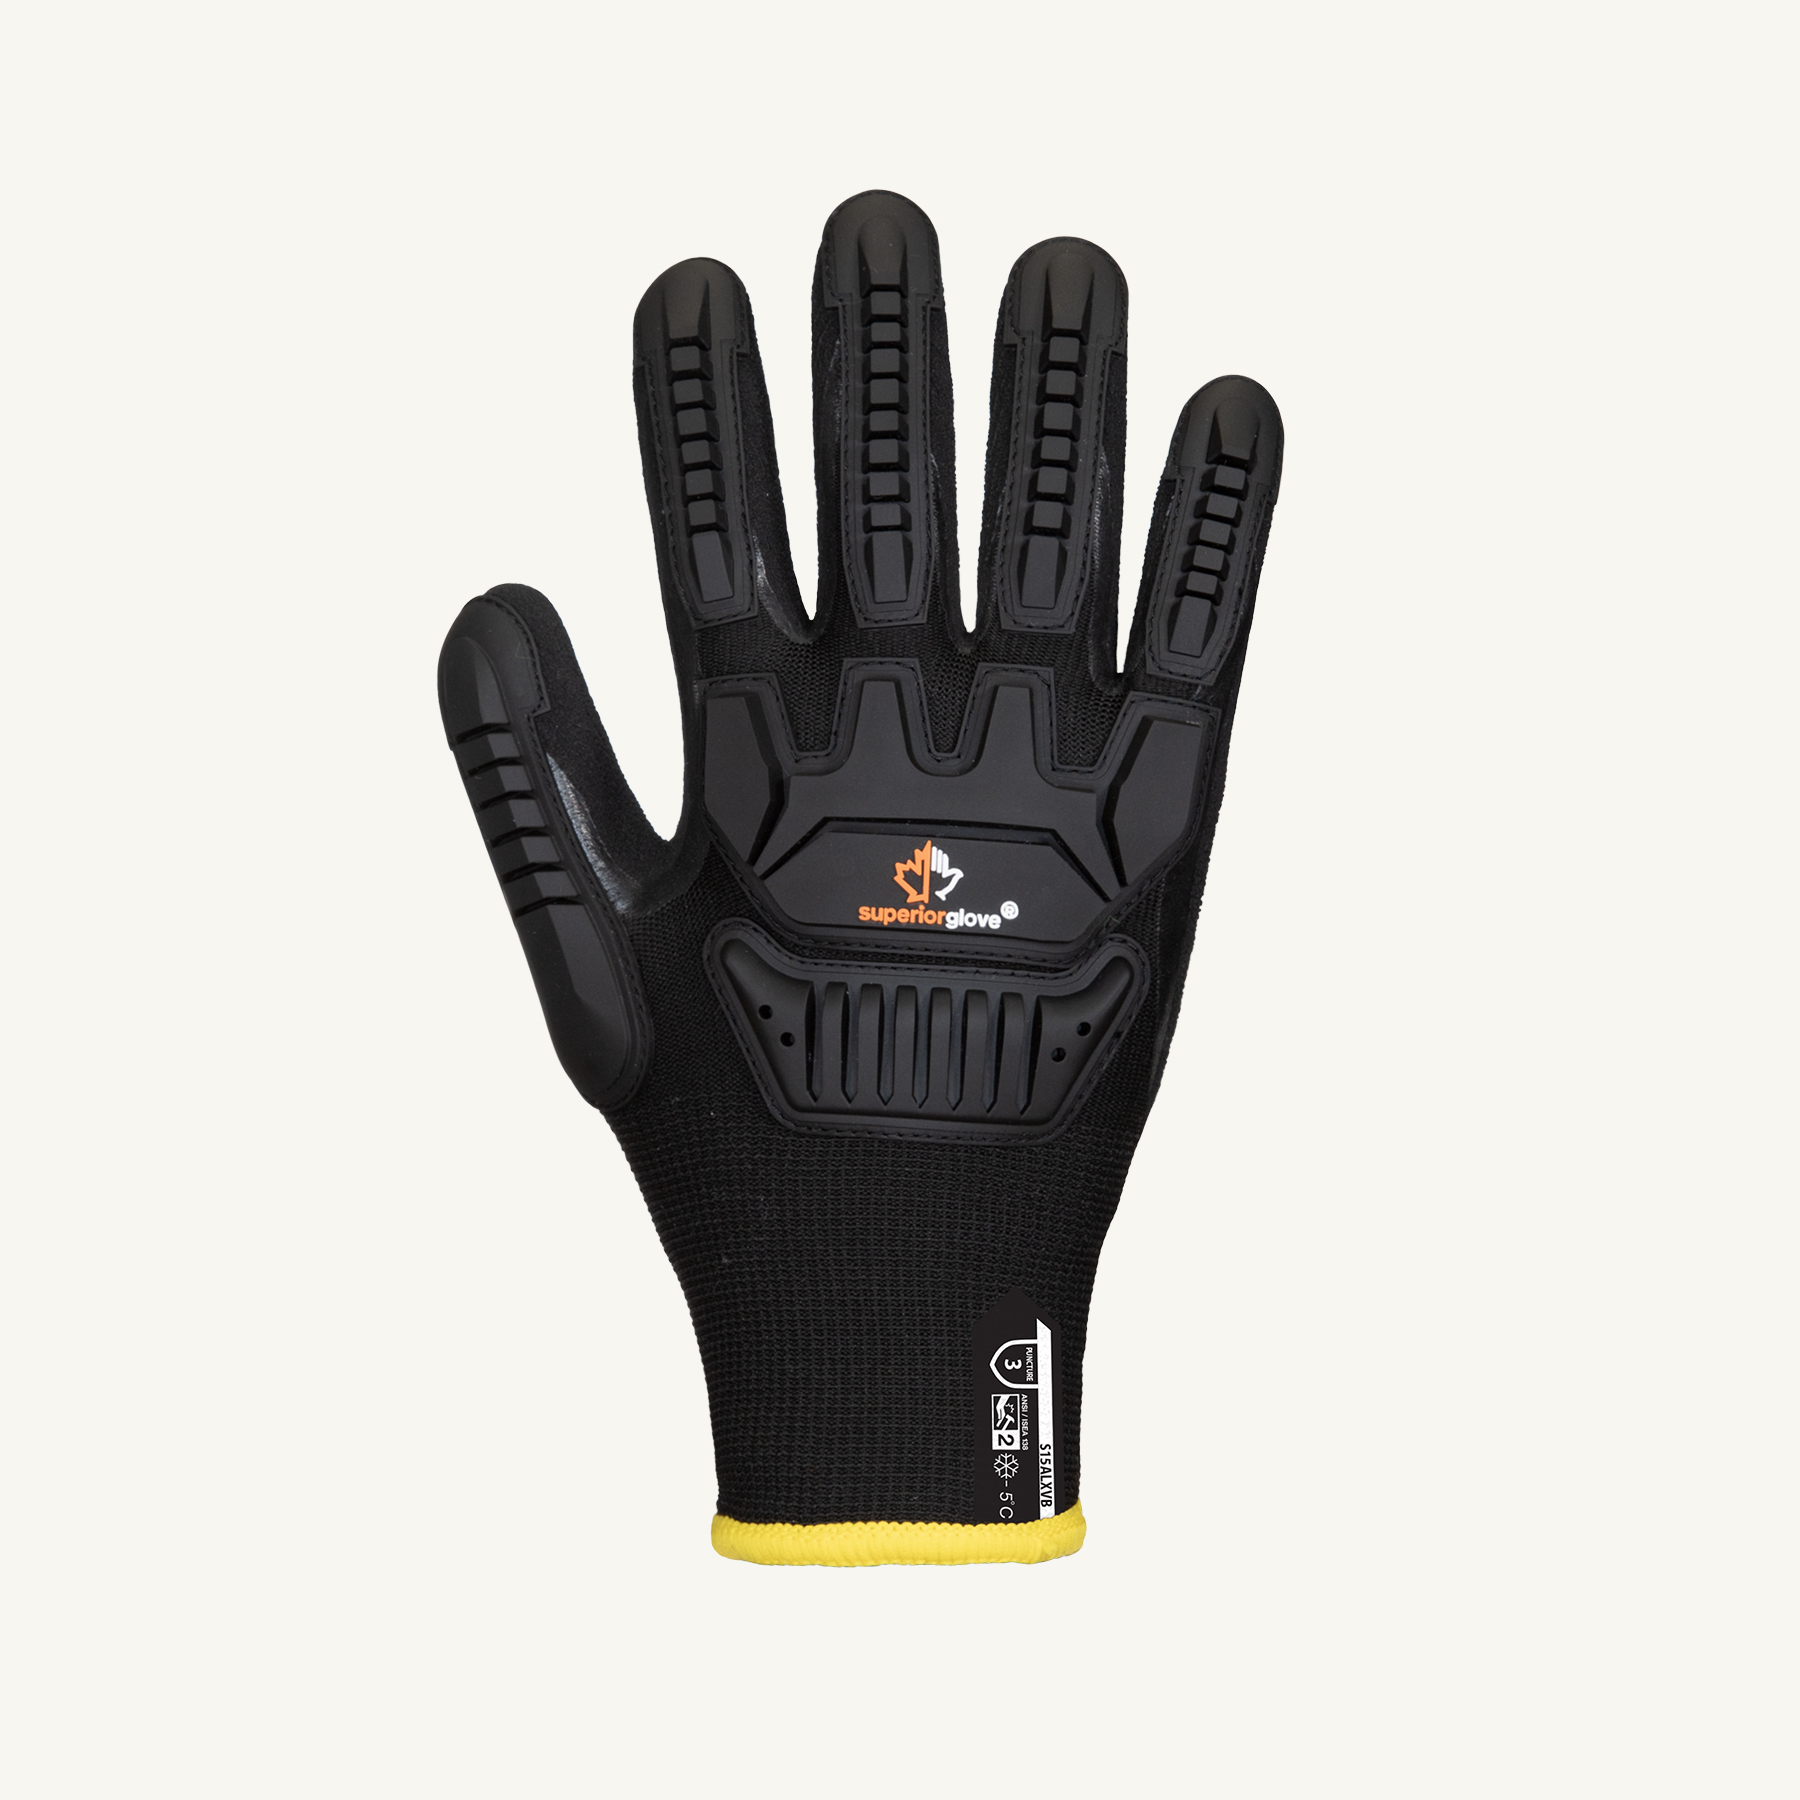 Superior Glove® Dexterity® S15ALXVB Latex Coated Impact Winter Gloves 